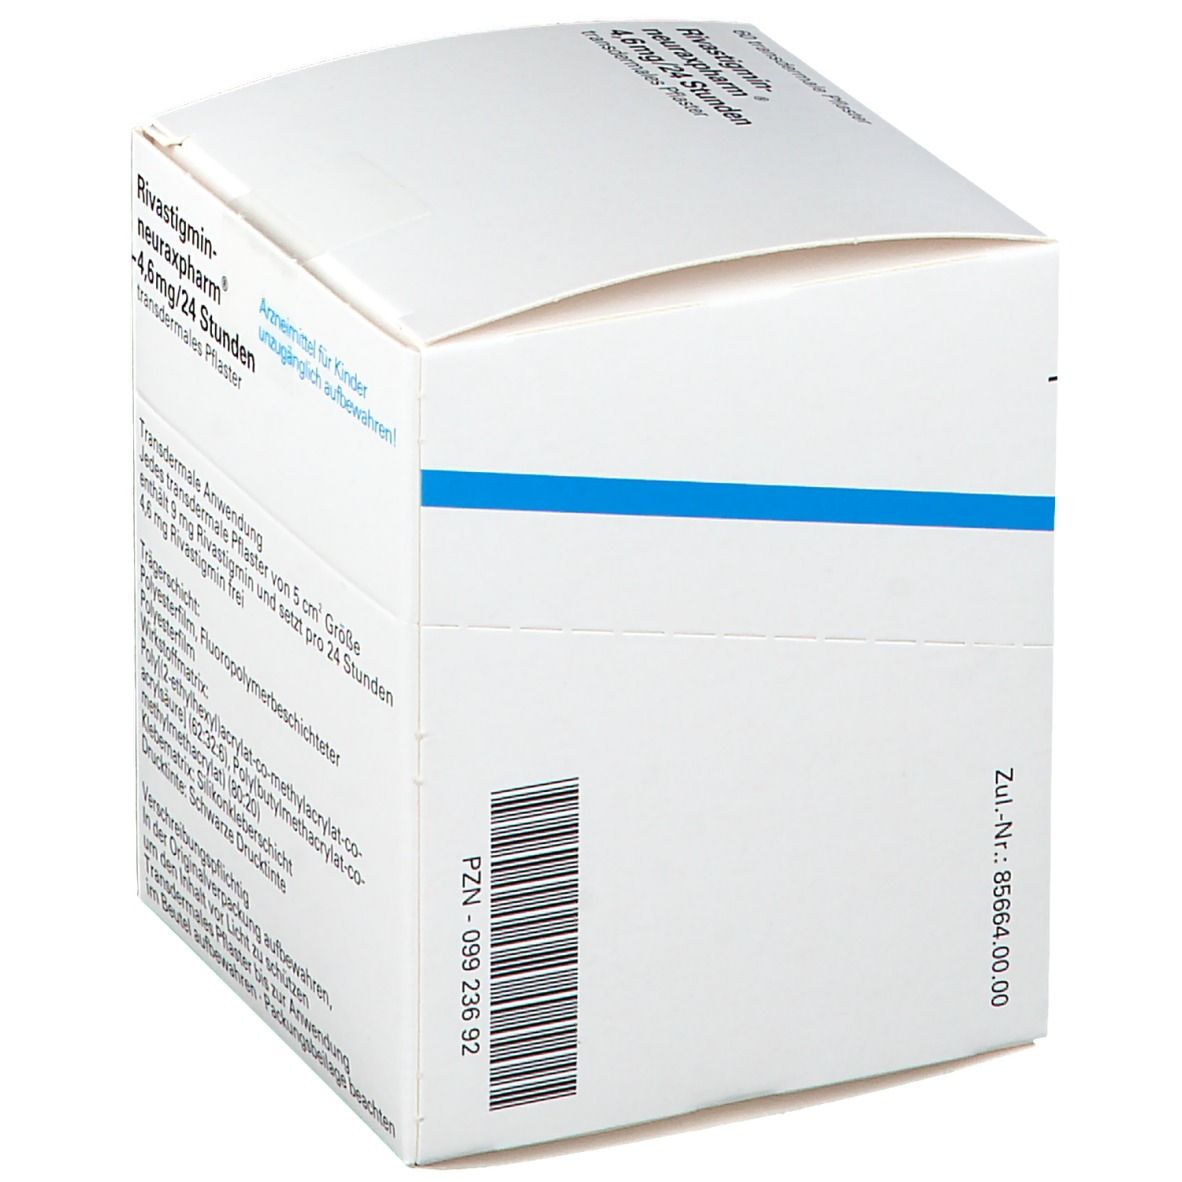 Rivastigmin-neuraxpharm® 4,6 mg/24 Stunden